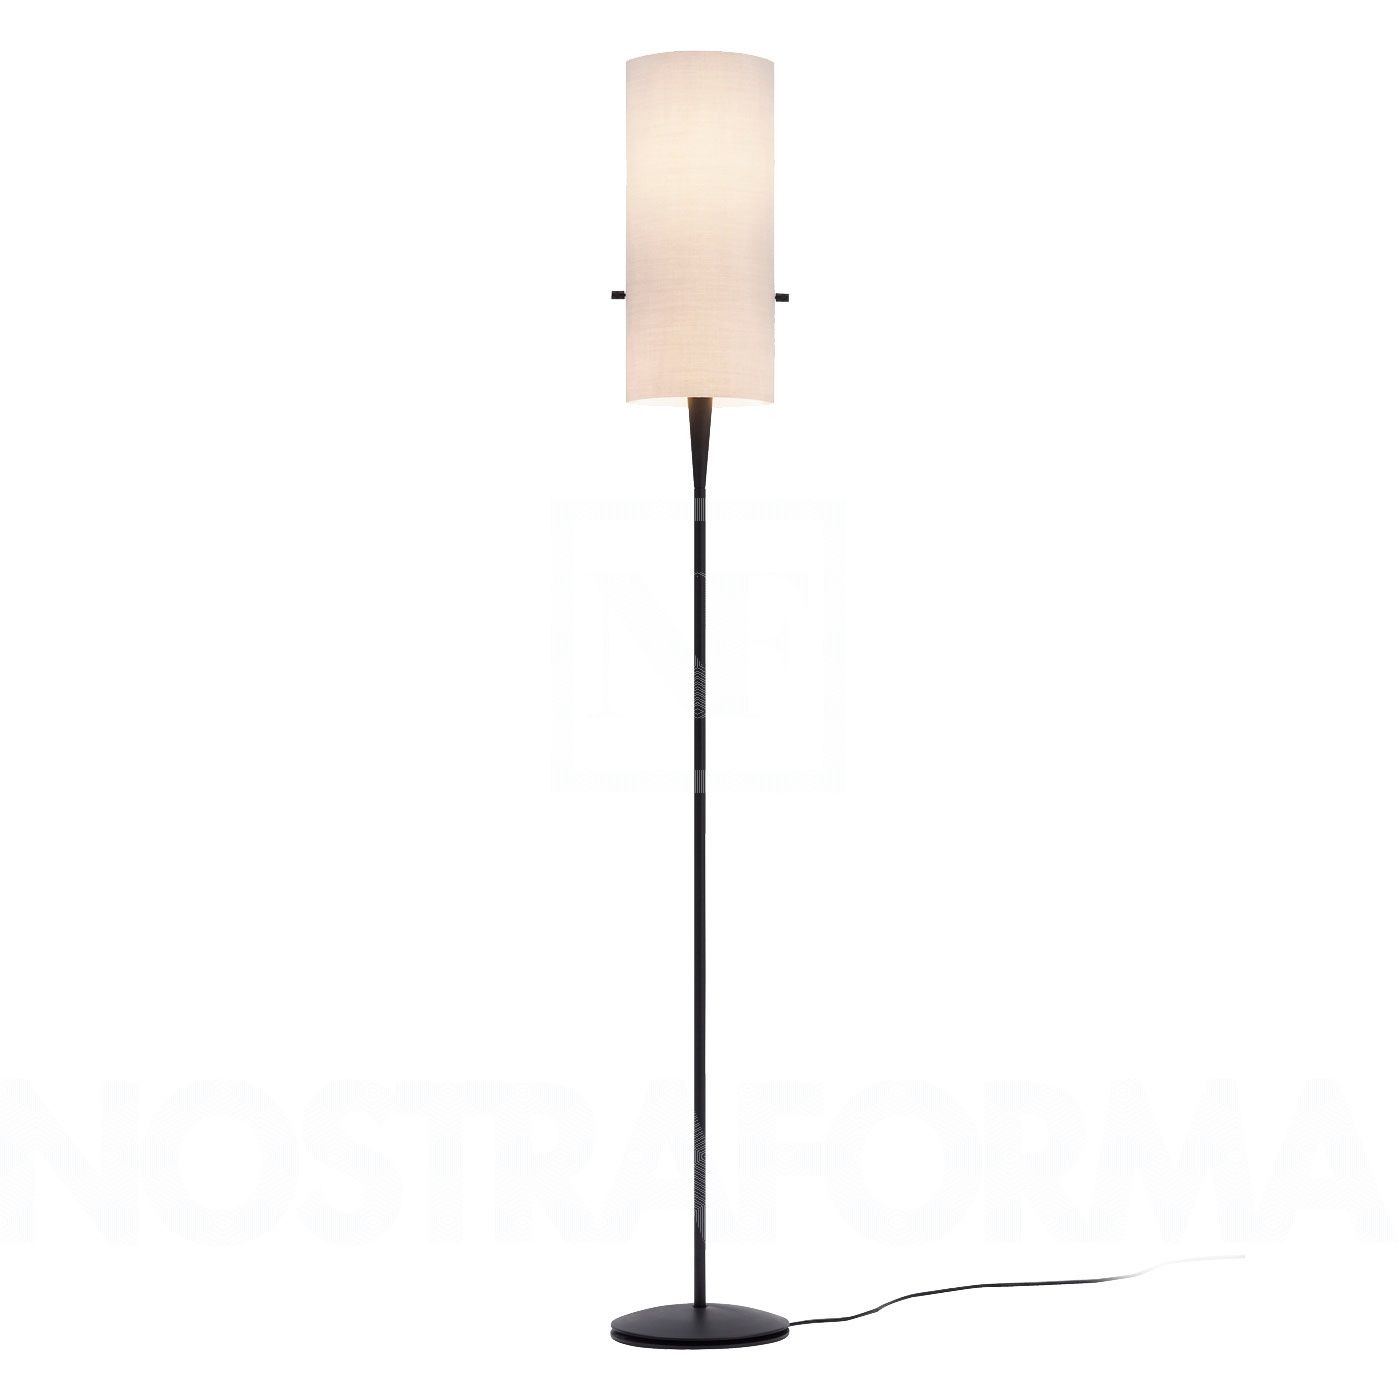 Serien Lighting Club S Floor Lamp with regard to sizing 1400 X 1400